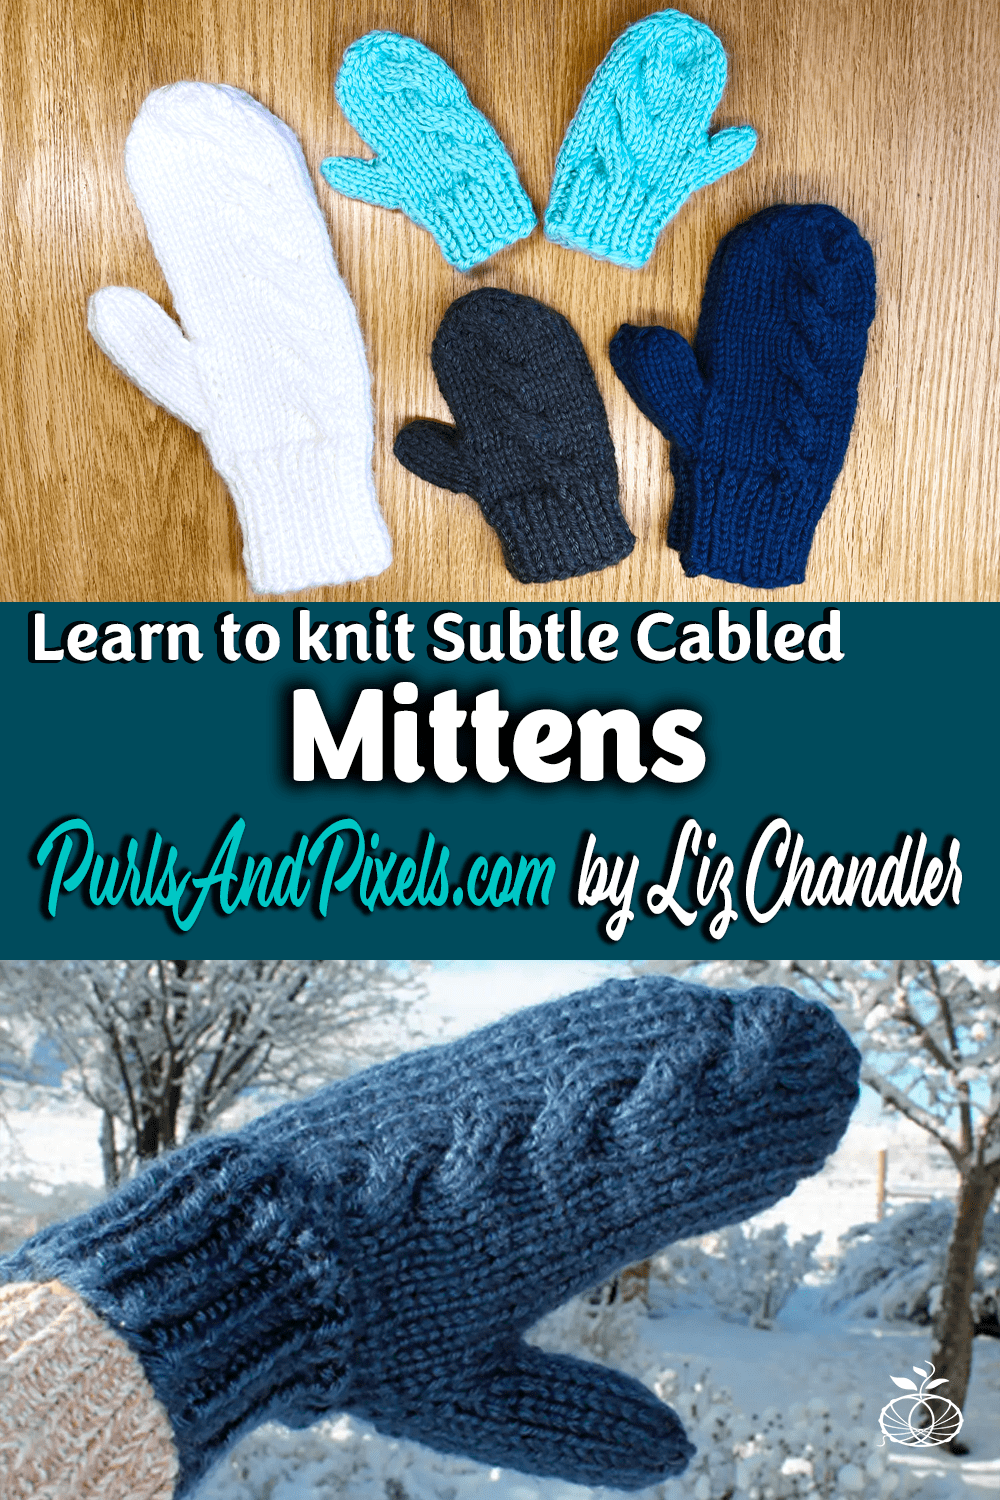 Subtle Cable Knit Mittens, designed by Liz Chandler @PurlsAndPixels